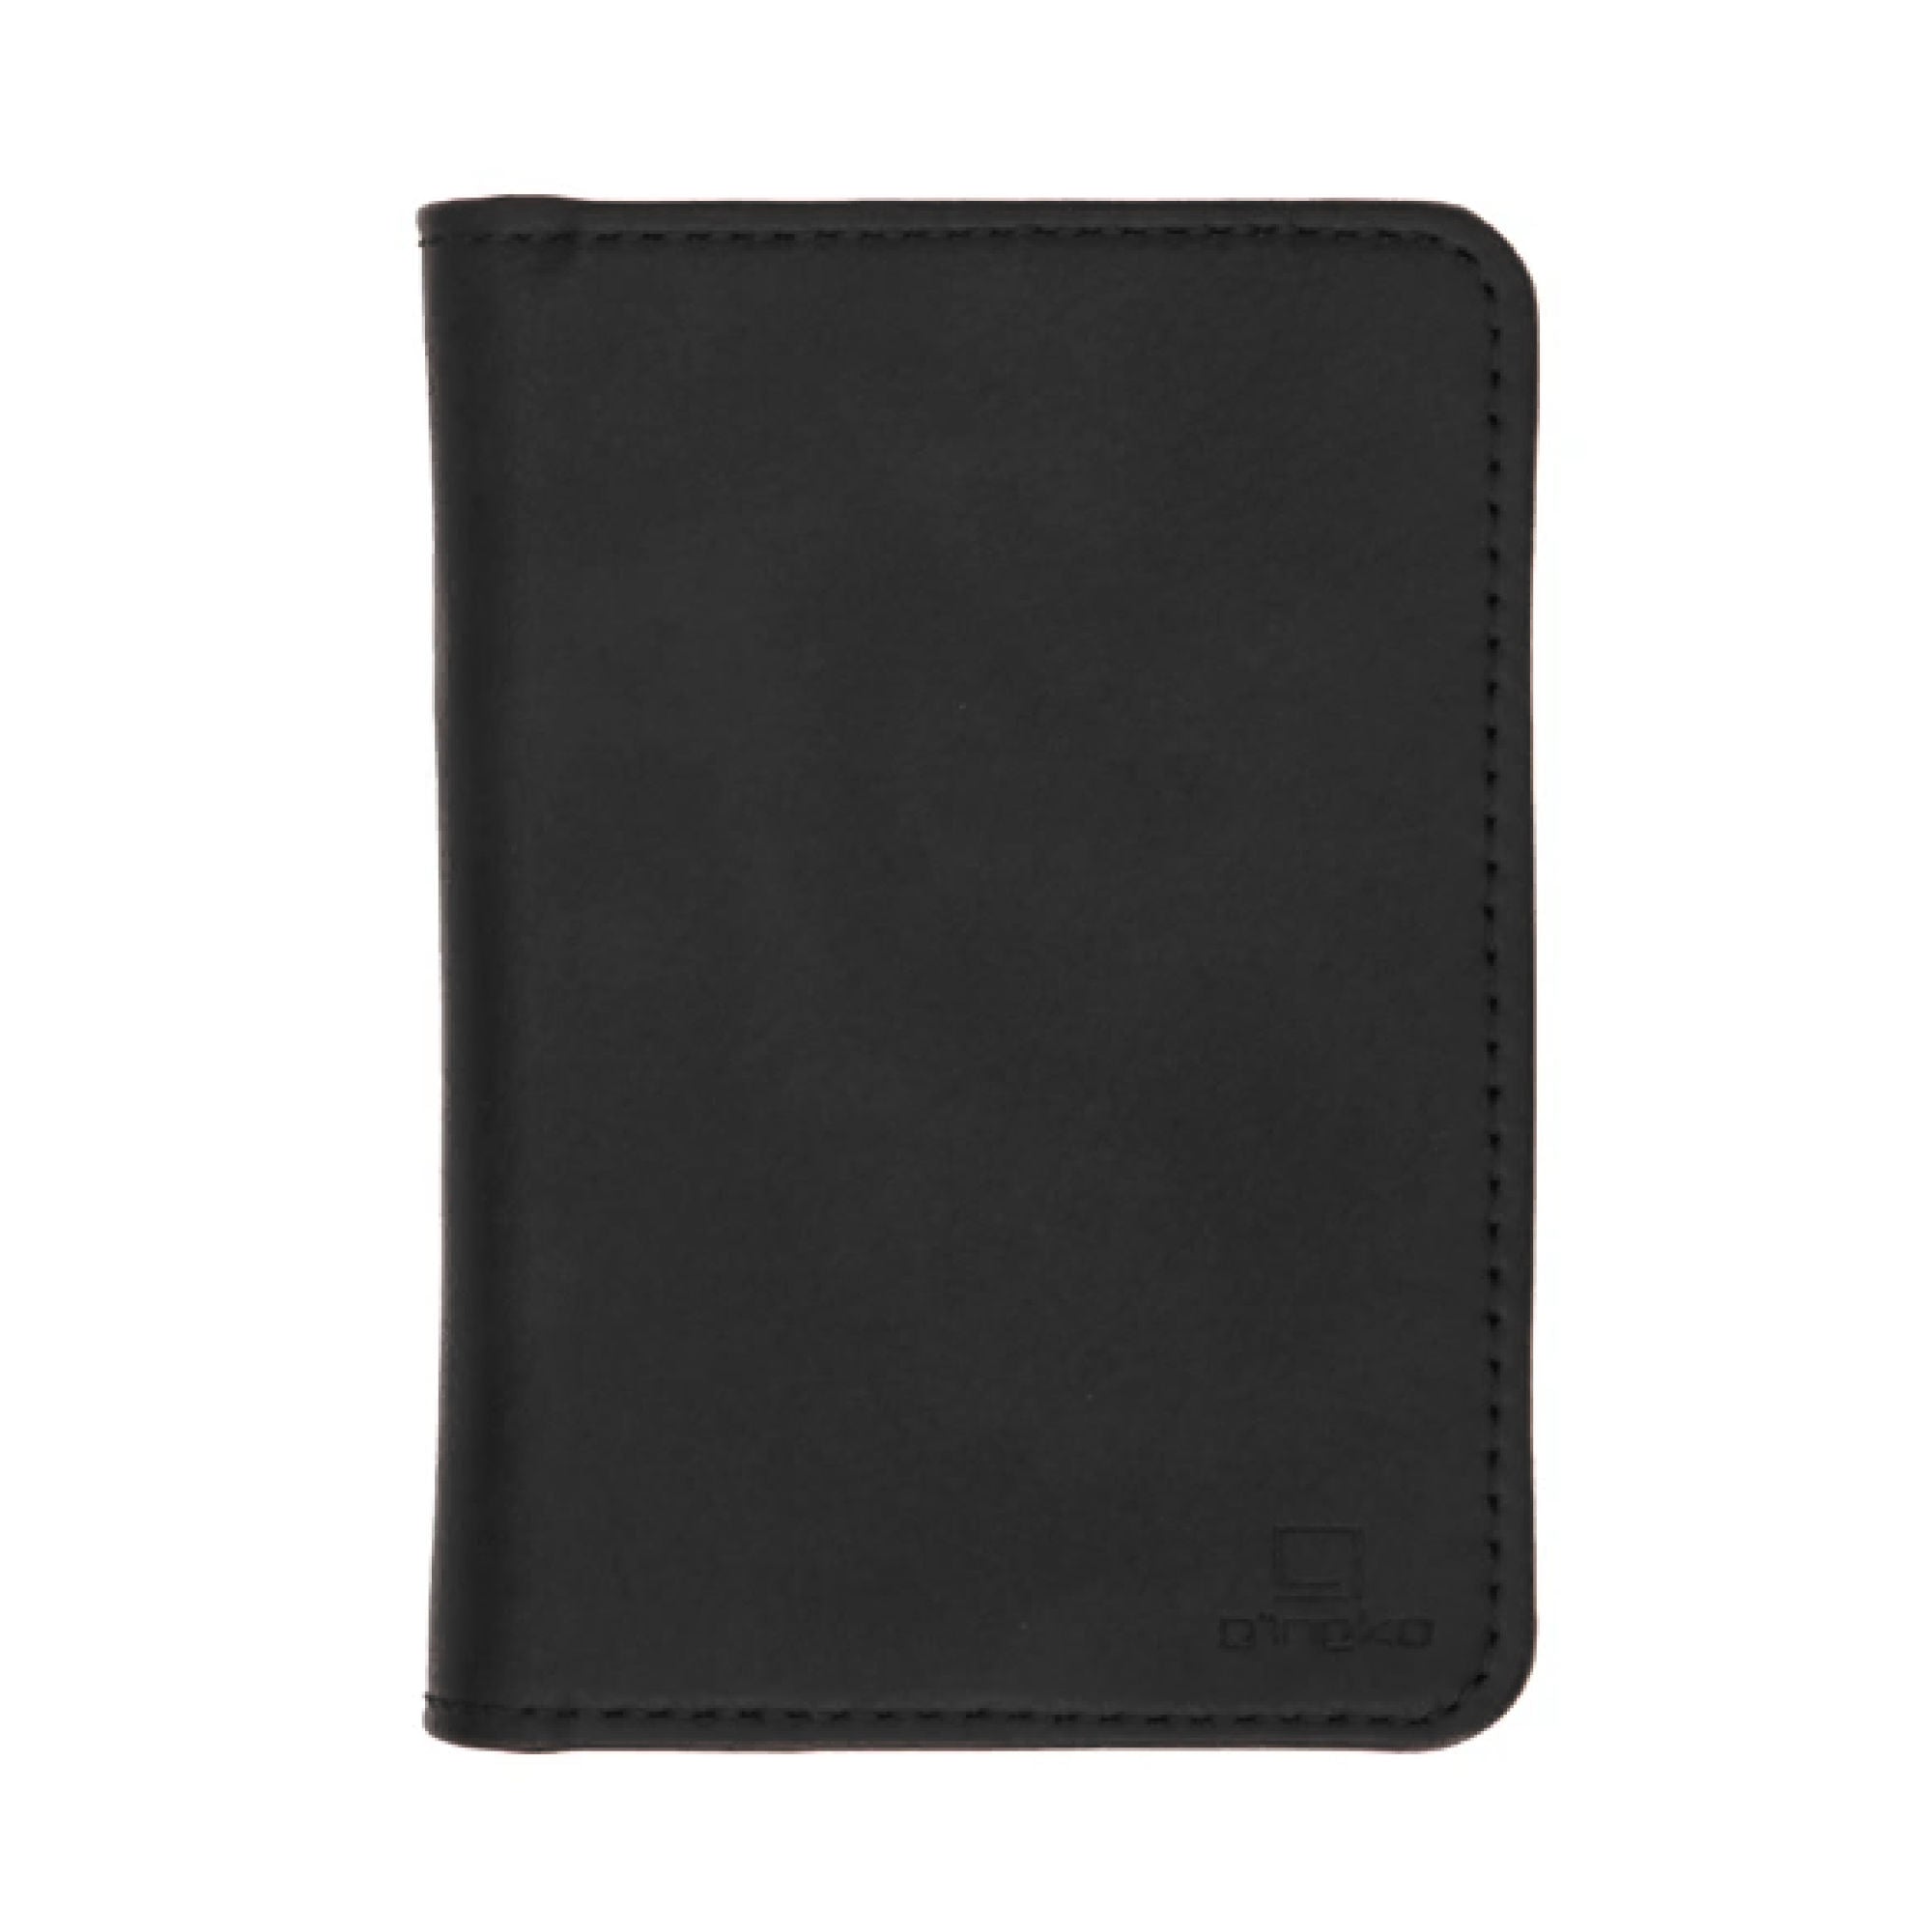 Gingko Smart Booklight mini, leather black